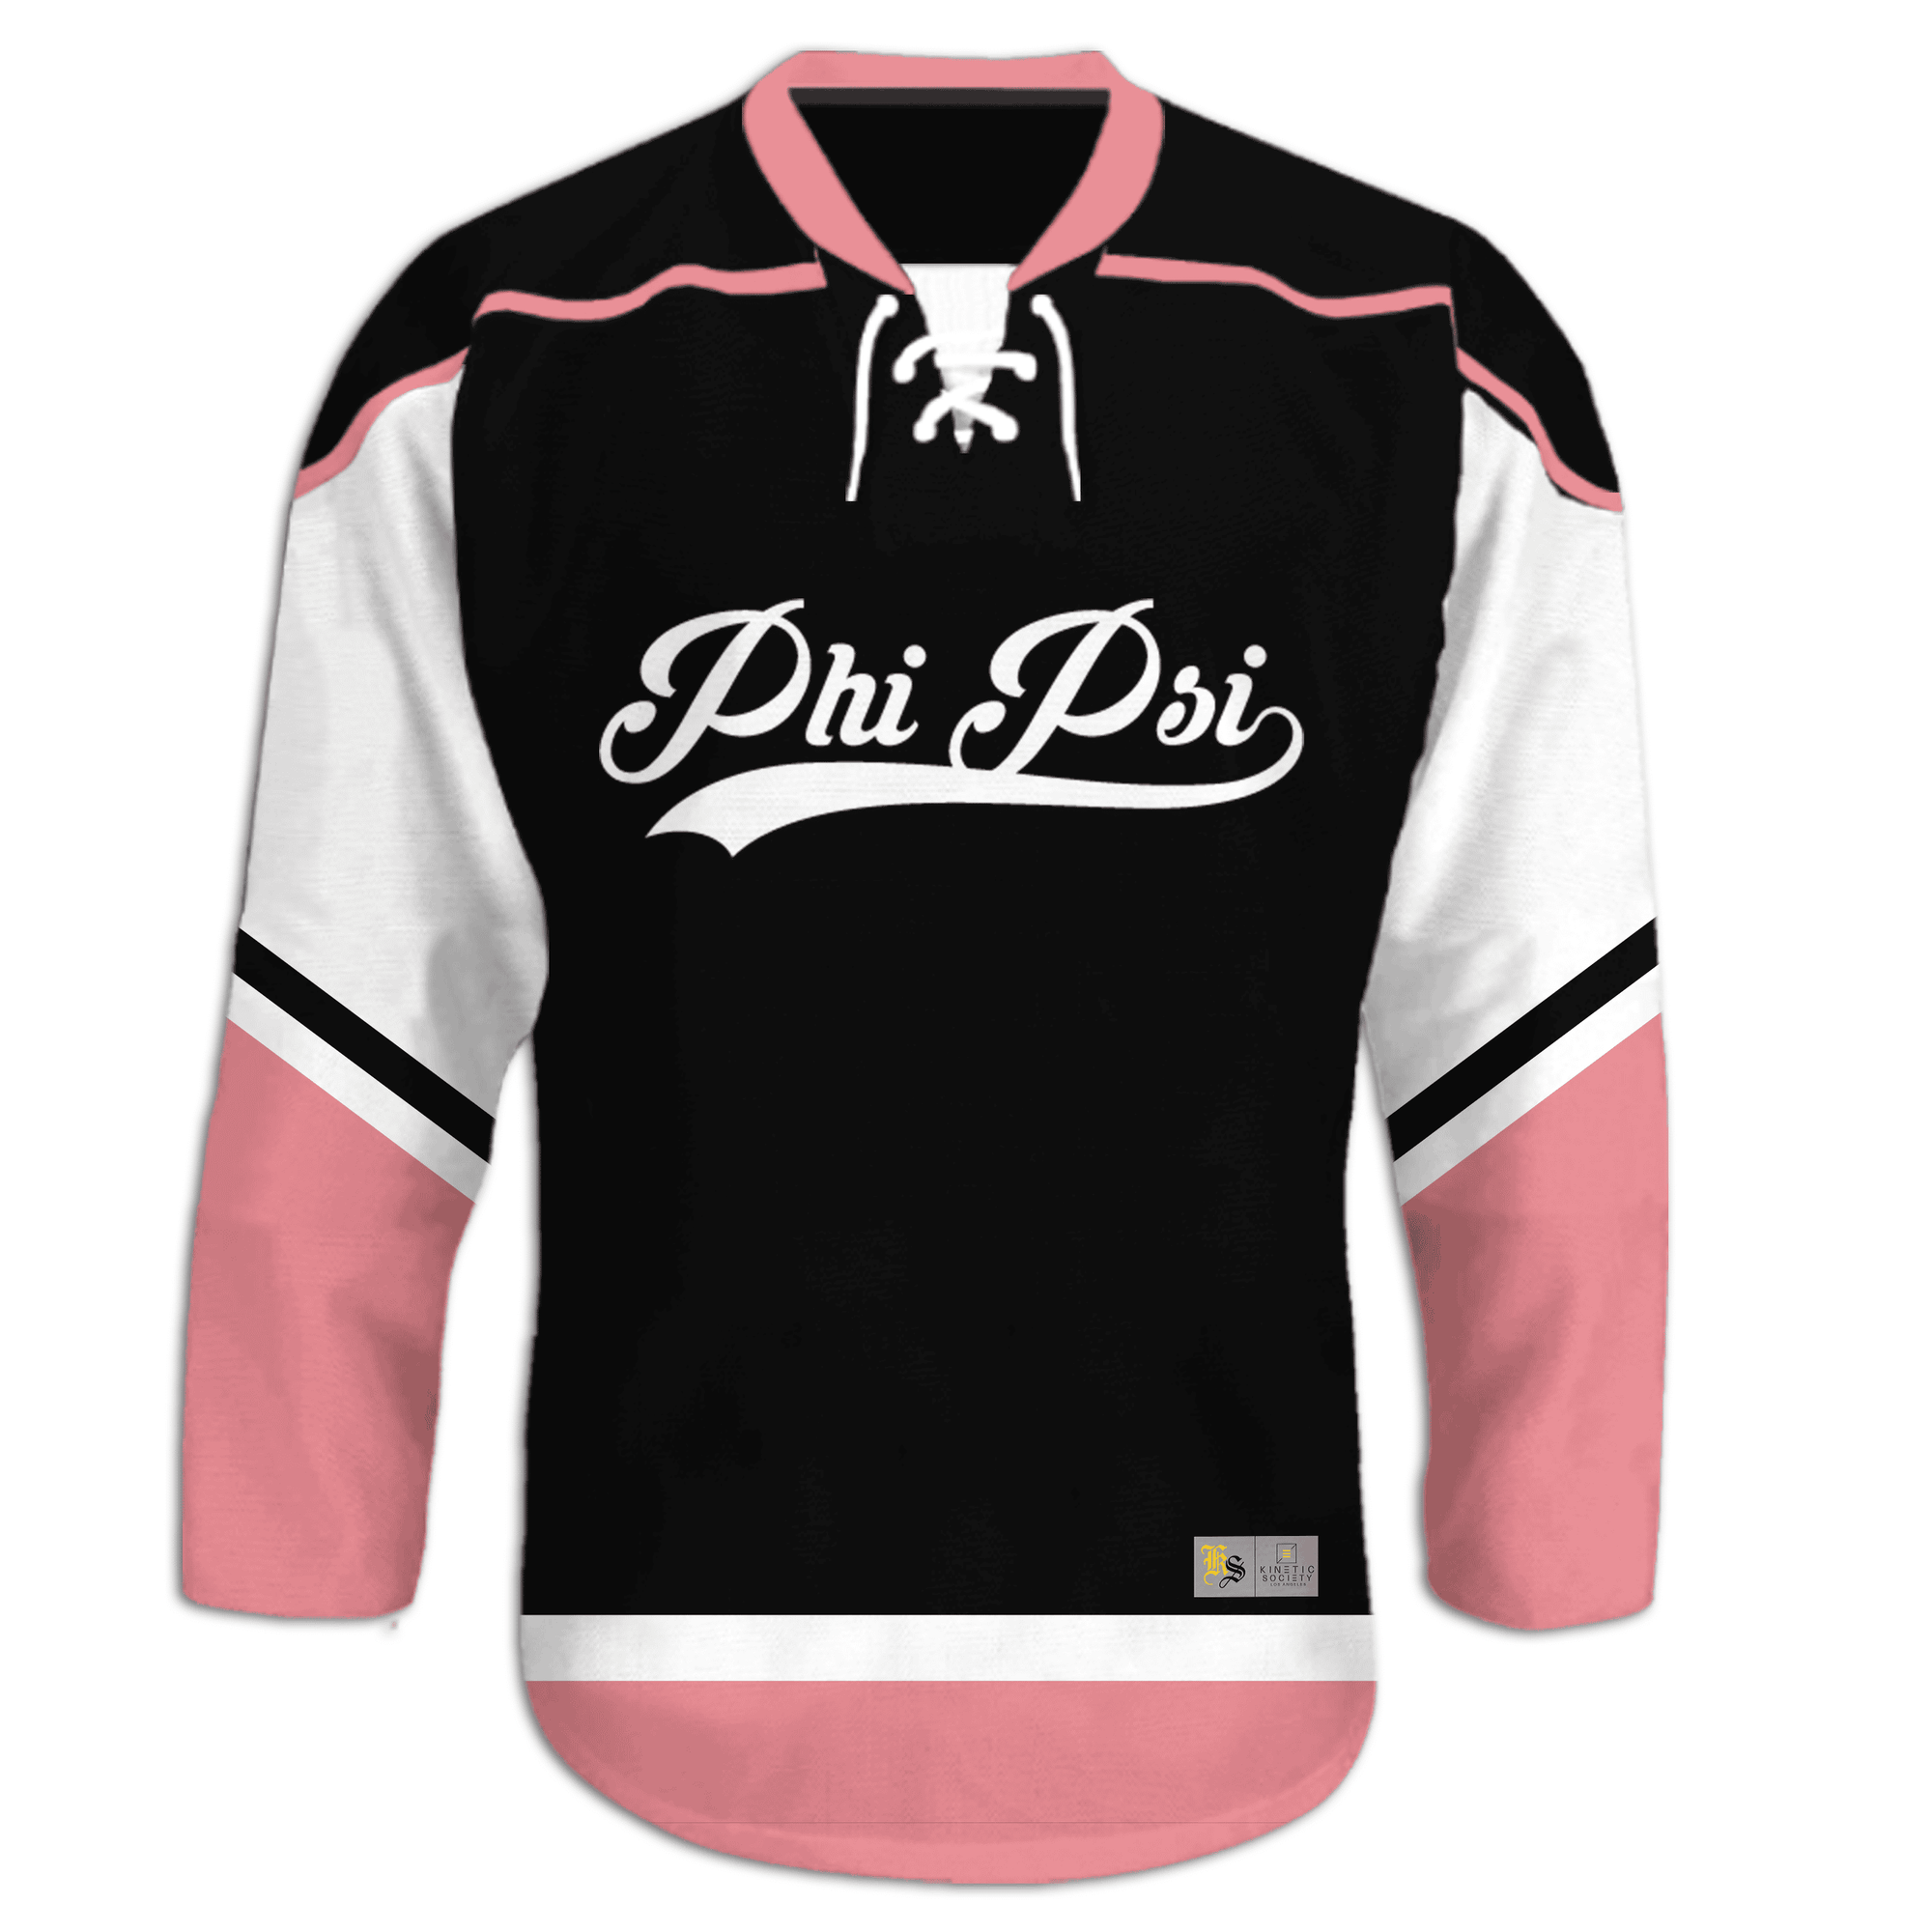 Phi Kappa Psi - Black Pink - Hockey Jersey